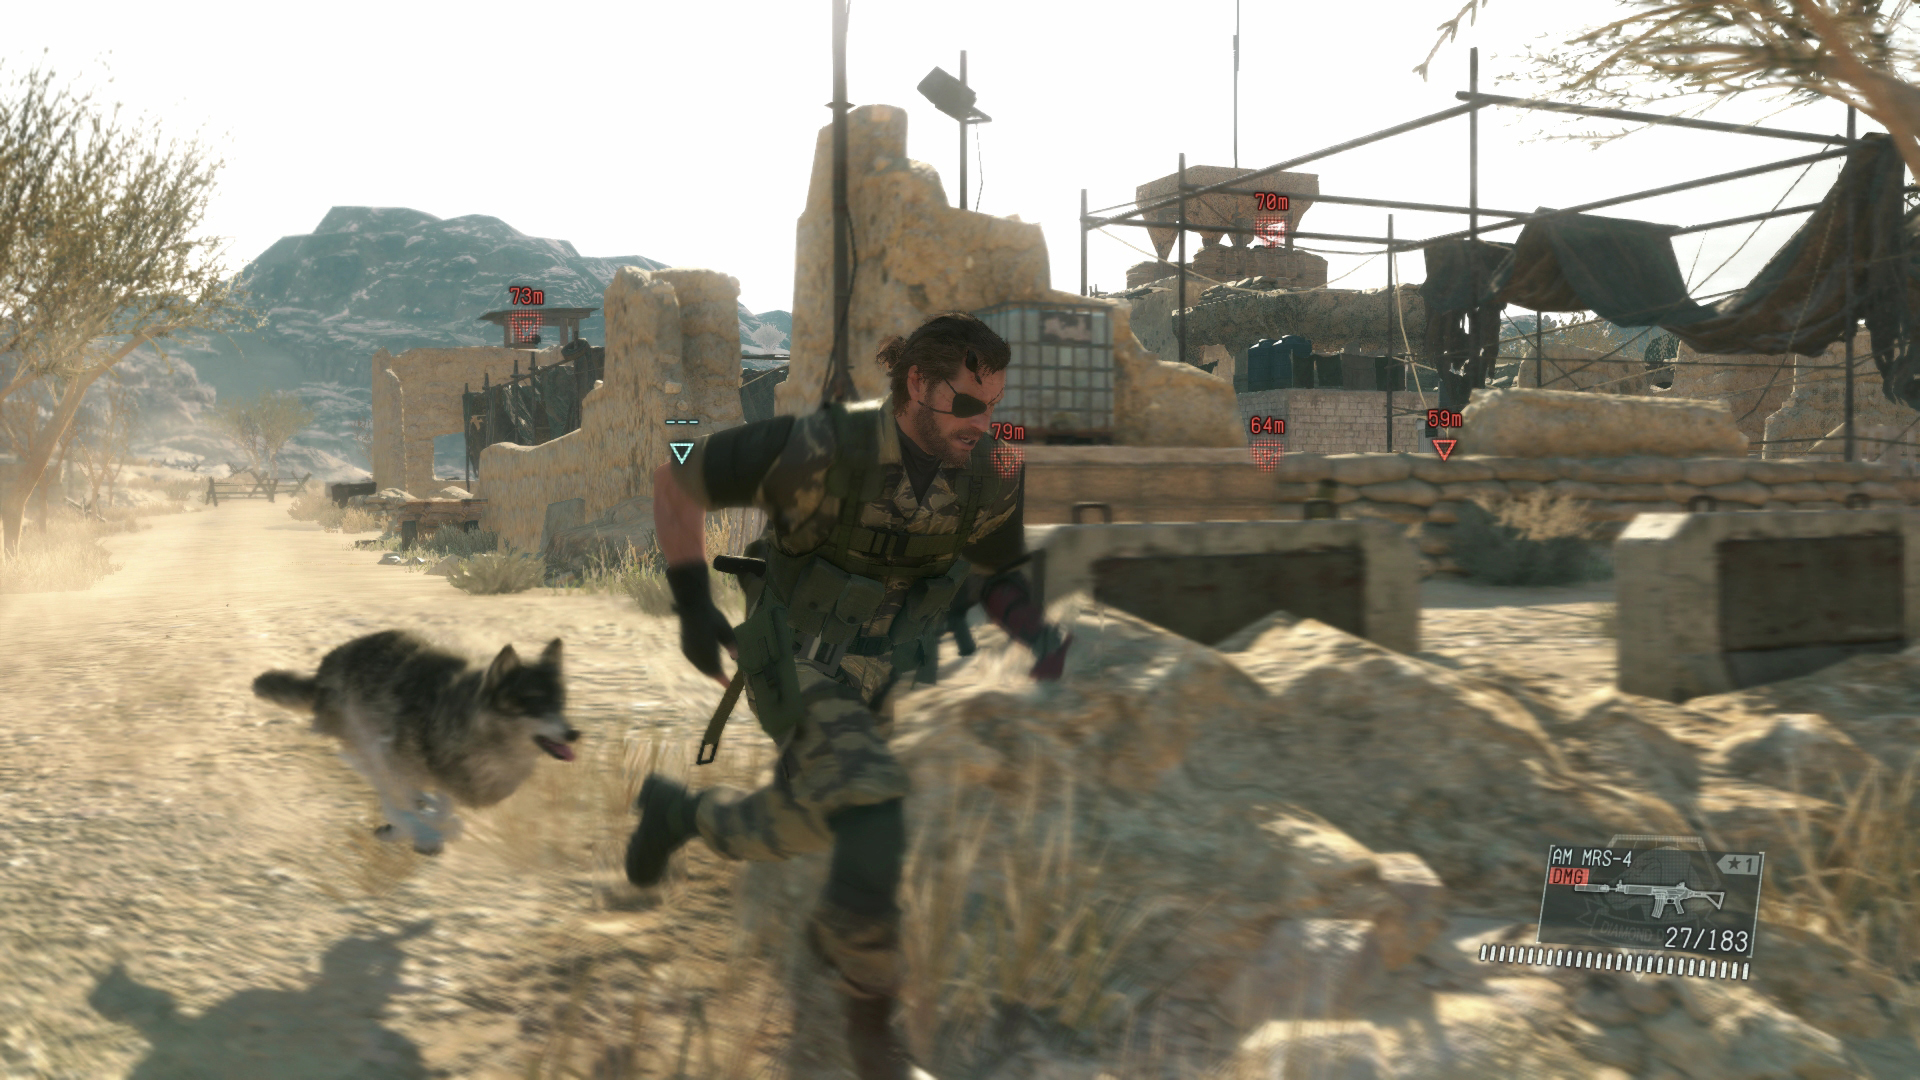 Metal Gear Solid V: The Phantom Pain - PC